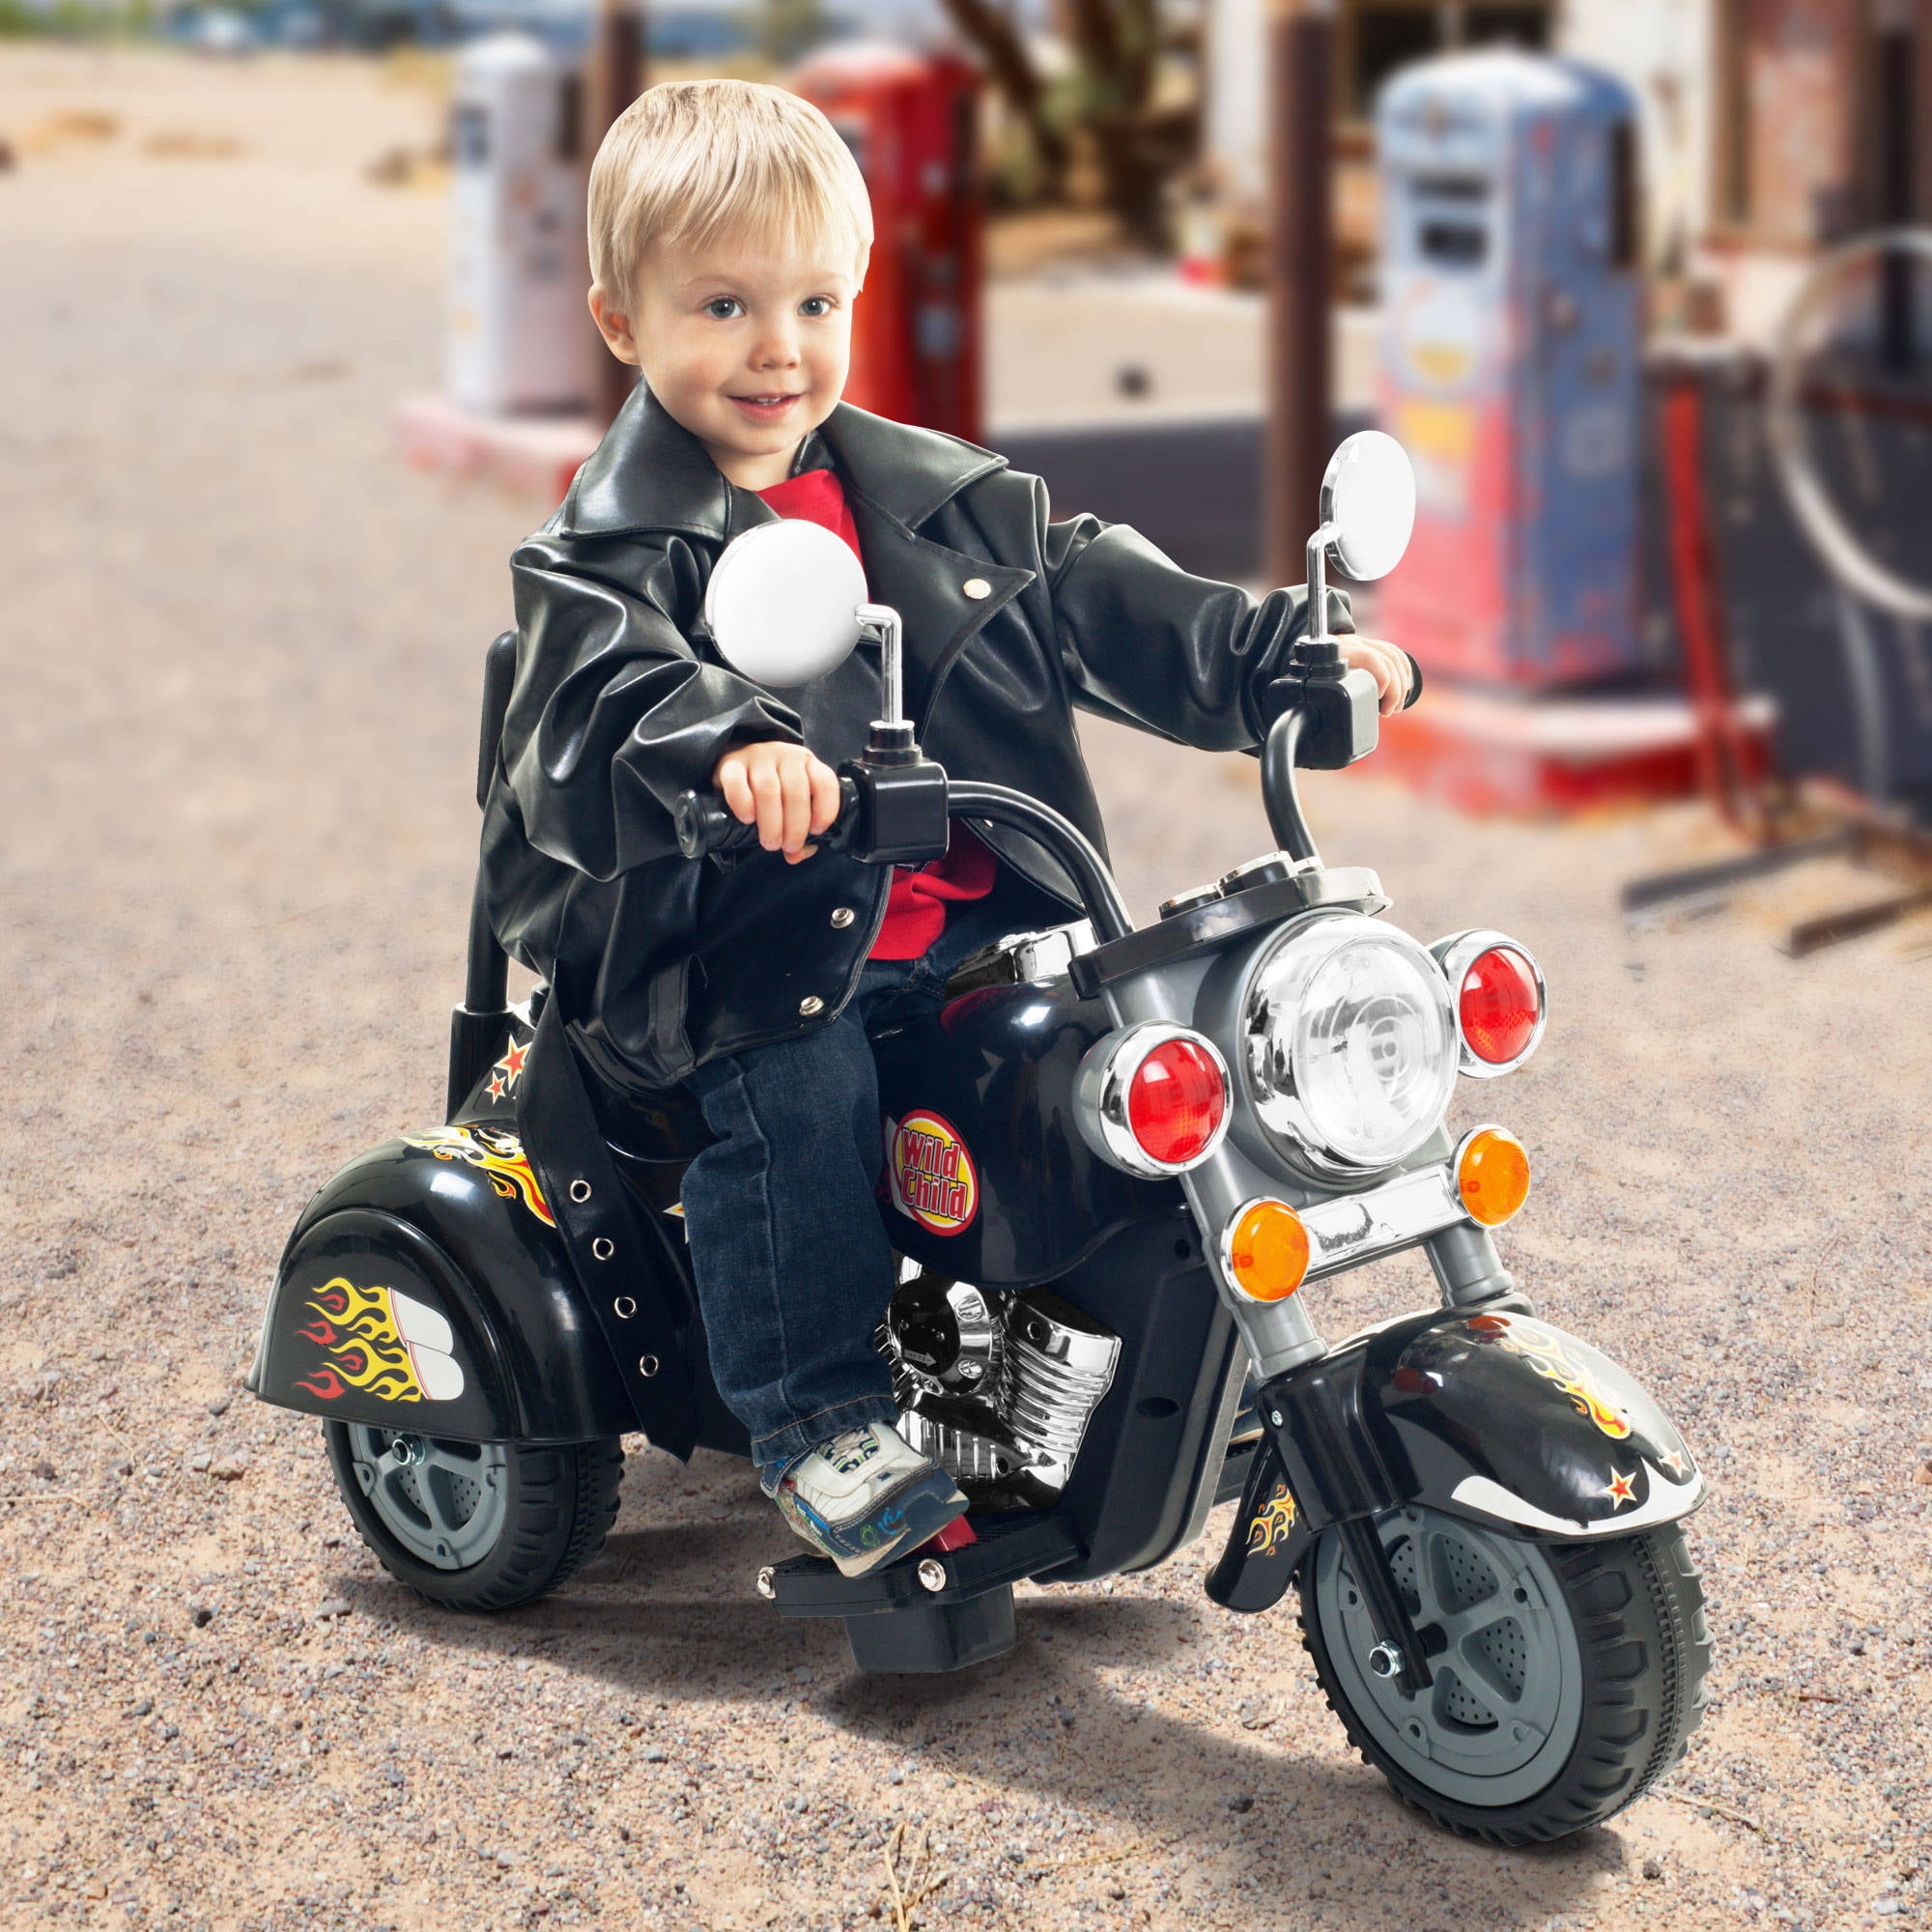 3 wheel motorcycle for kids